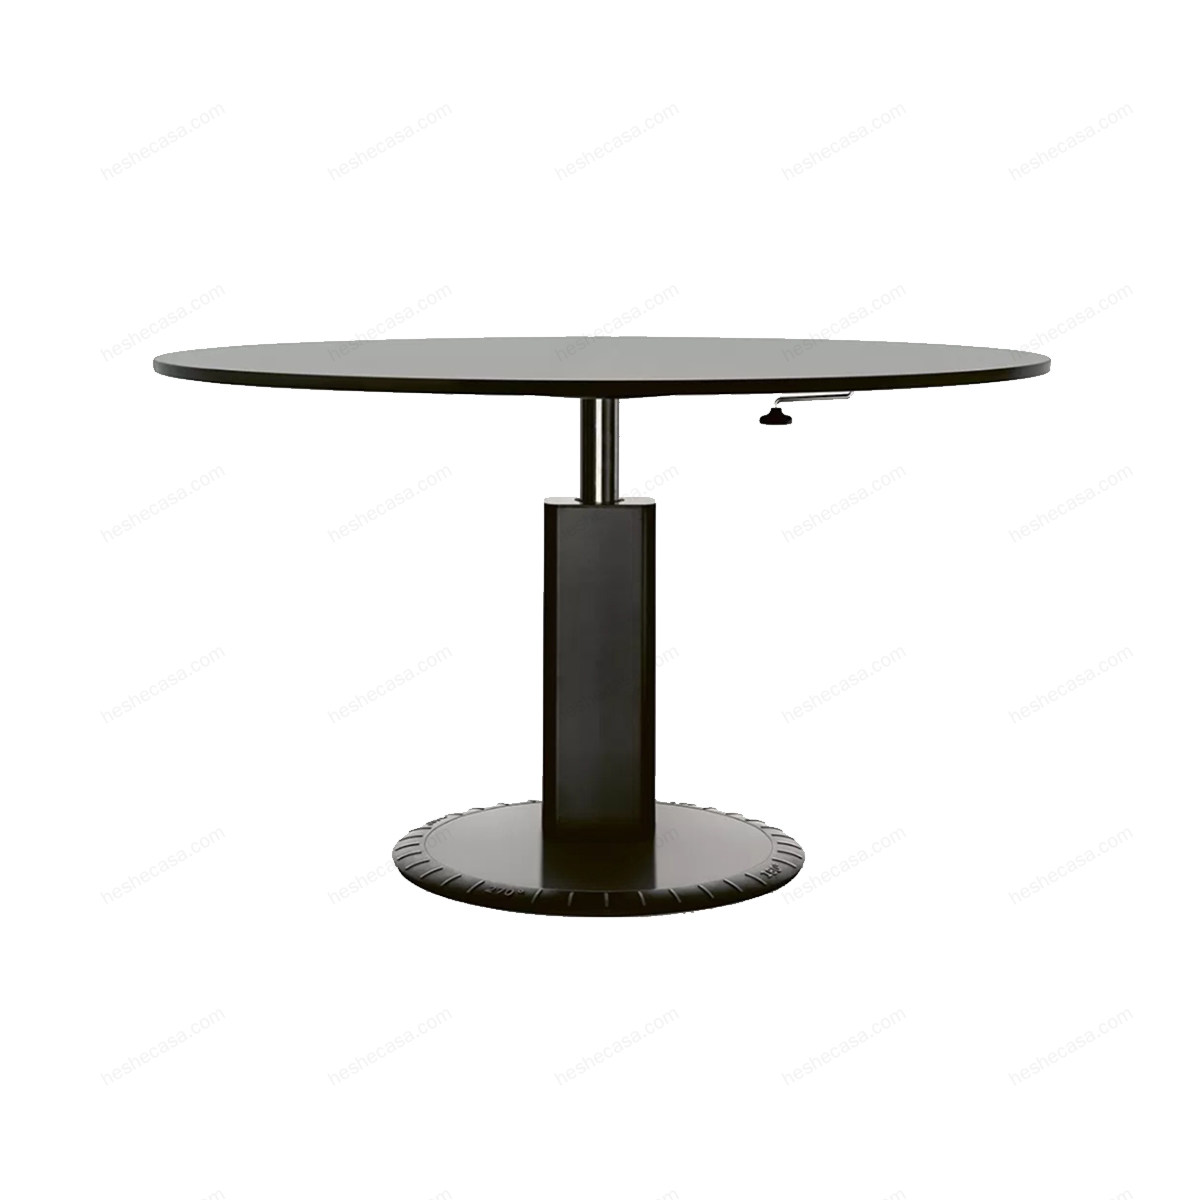 360-Table餐桌